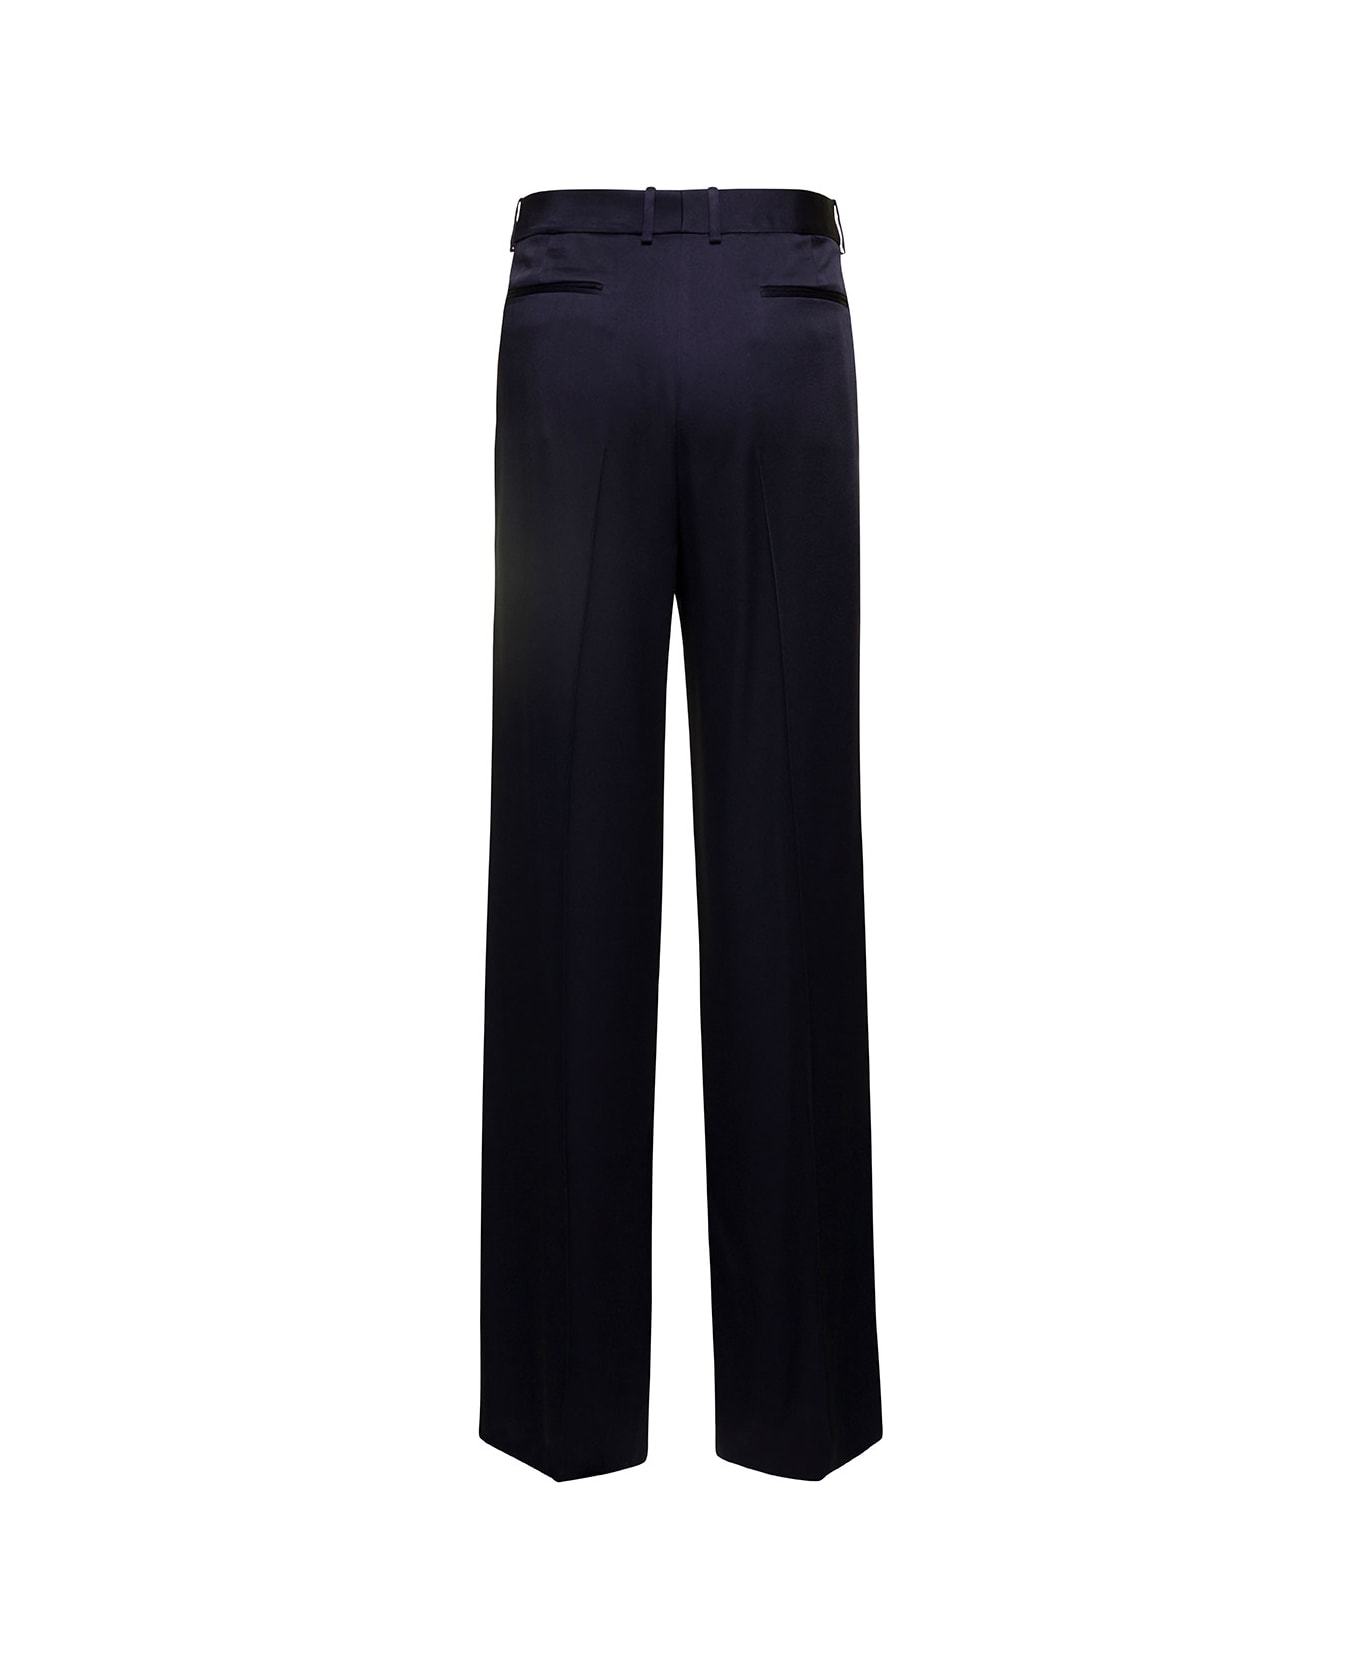 Saint Laurent Black Tailored Cut Trousers Satin Finish In Acetate Man - Blu